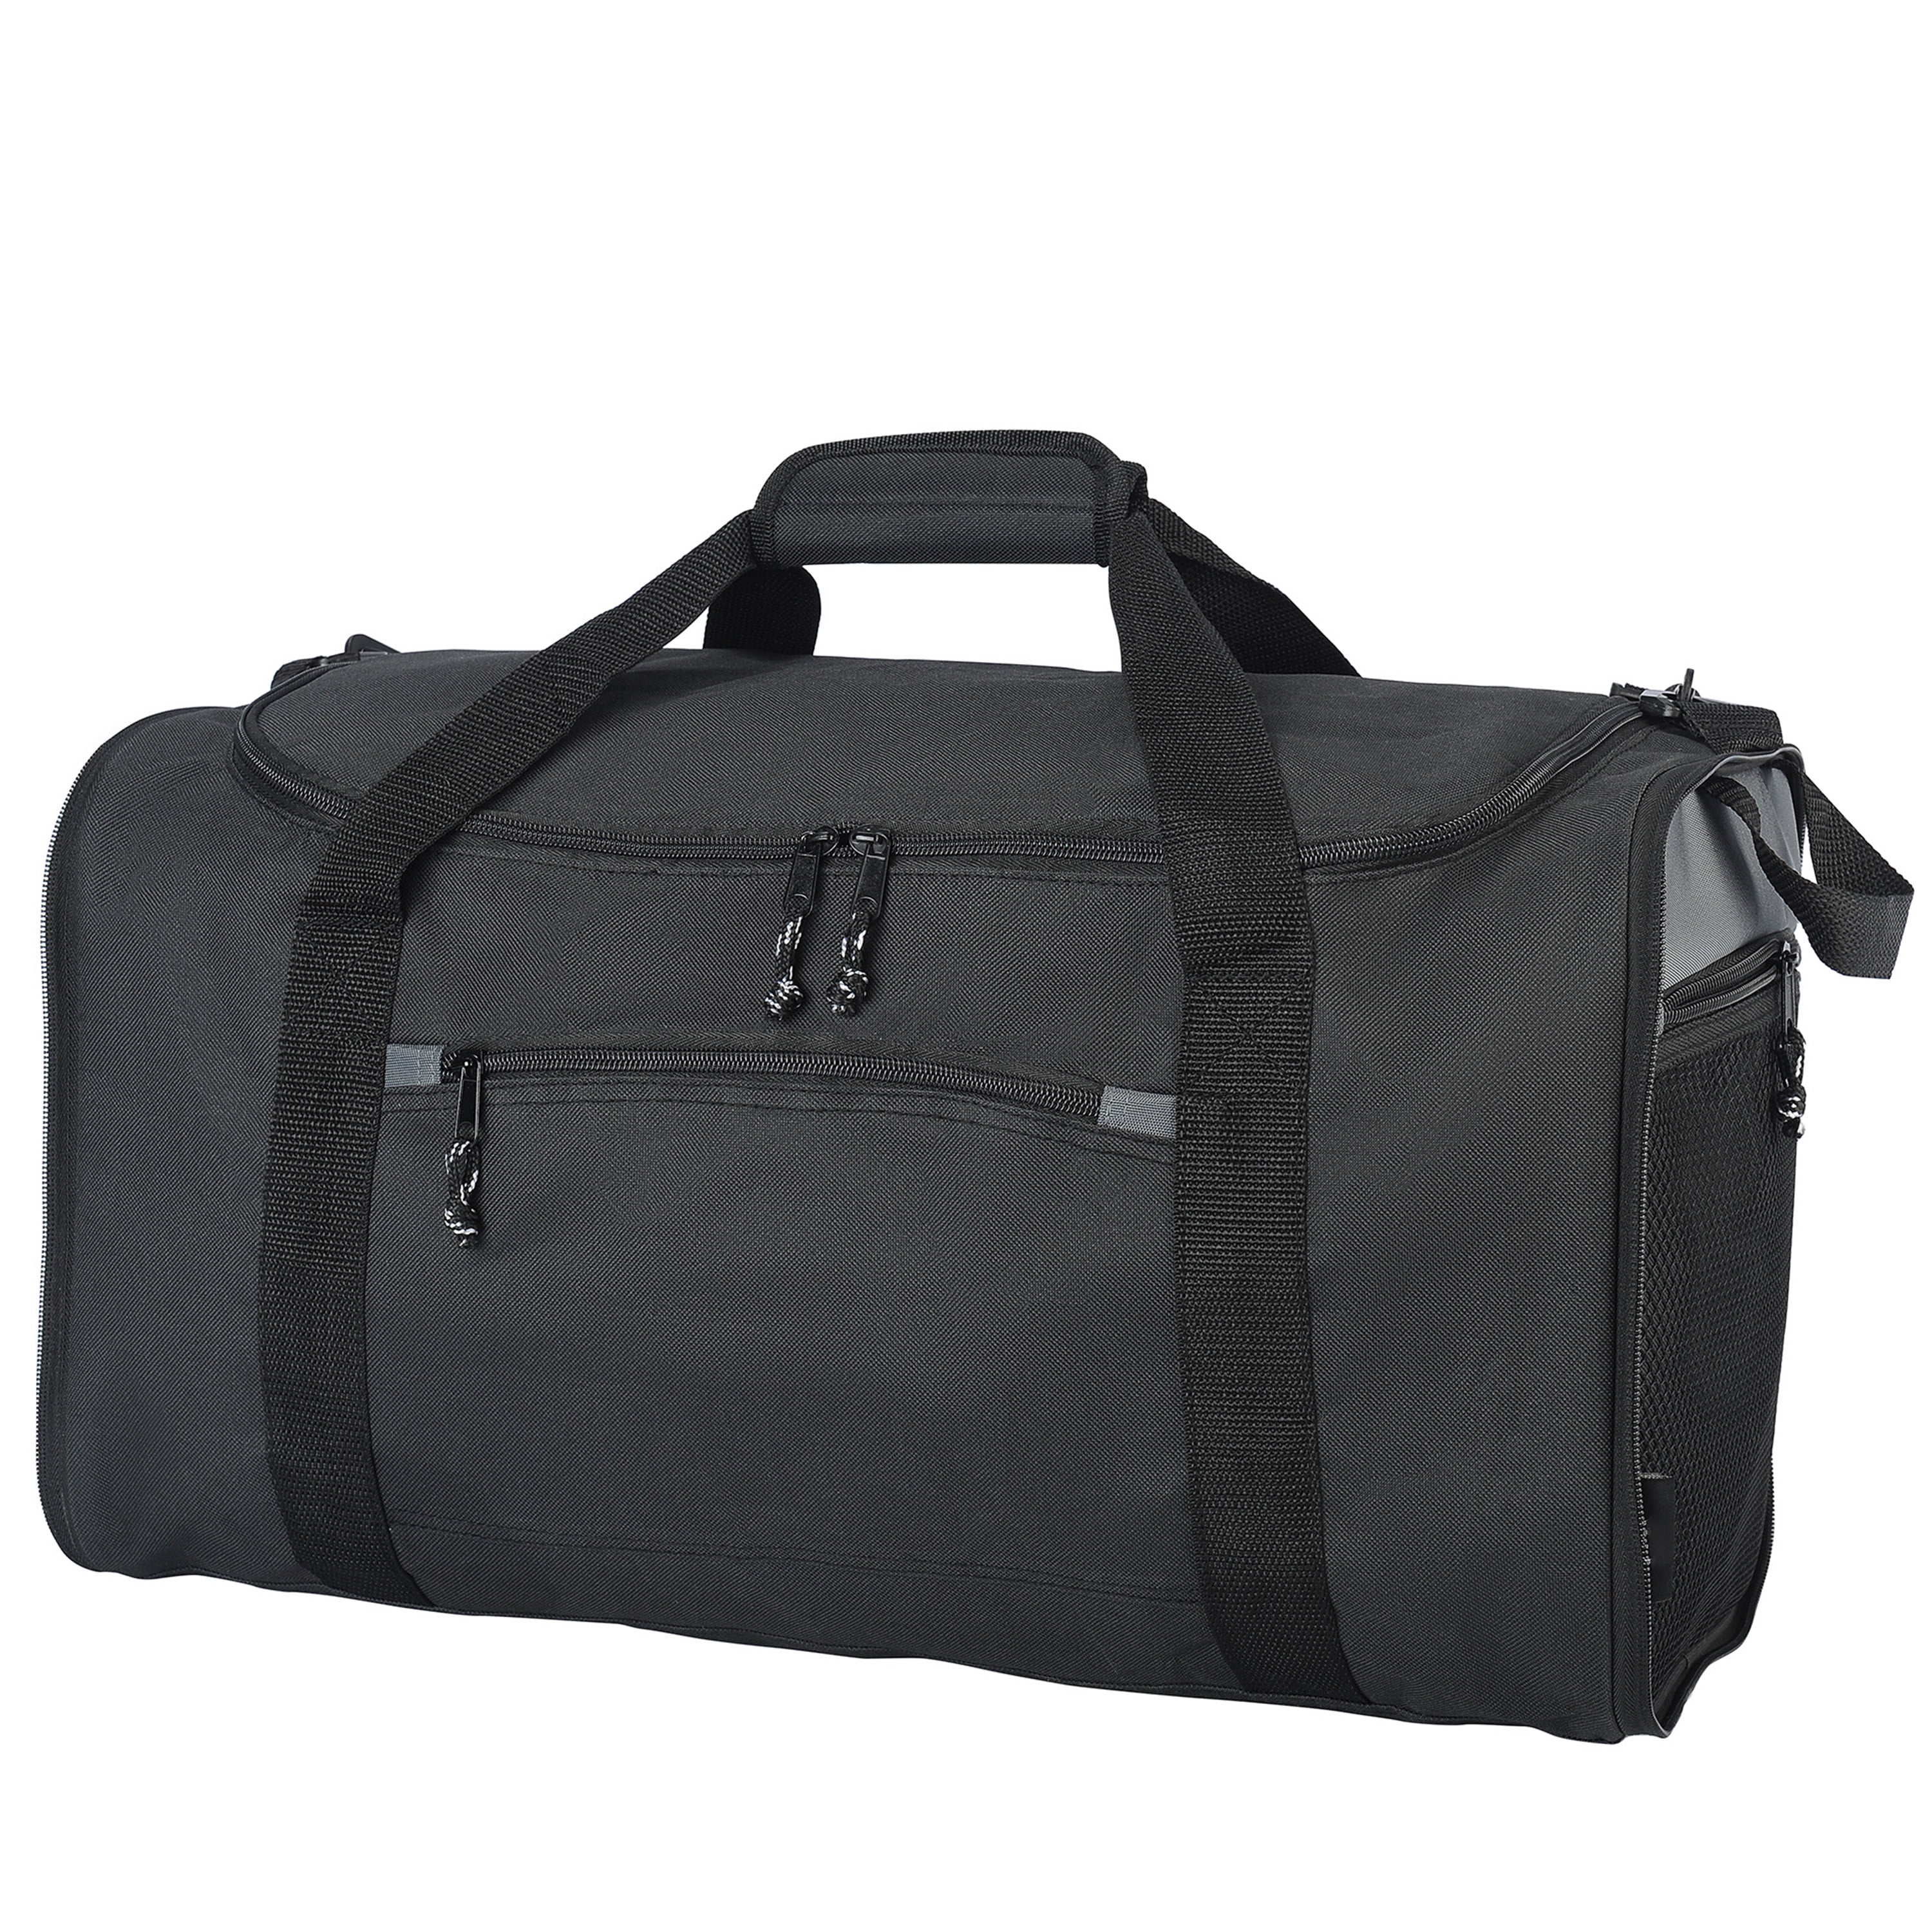 20" Men/Women Travel  Duffle Duffel Gym Sports Bag Multi-Usage Royal/Black 